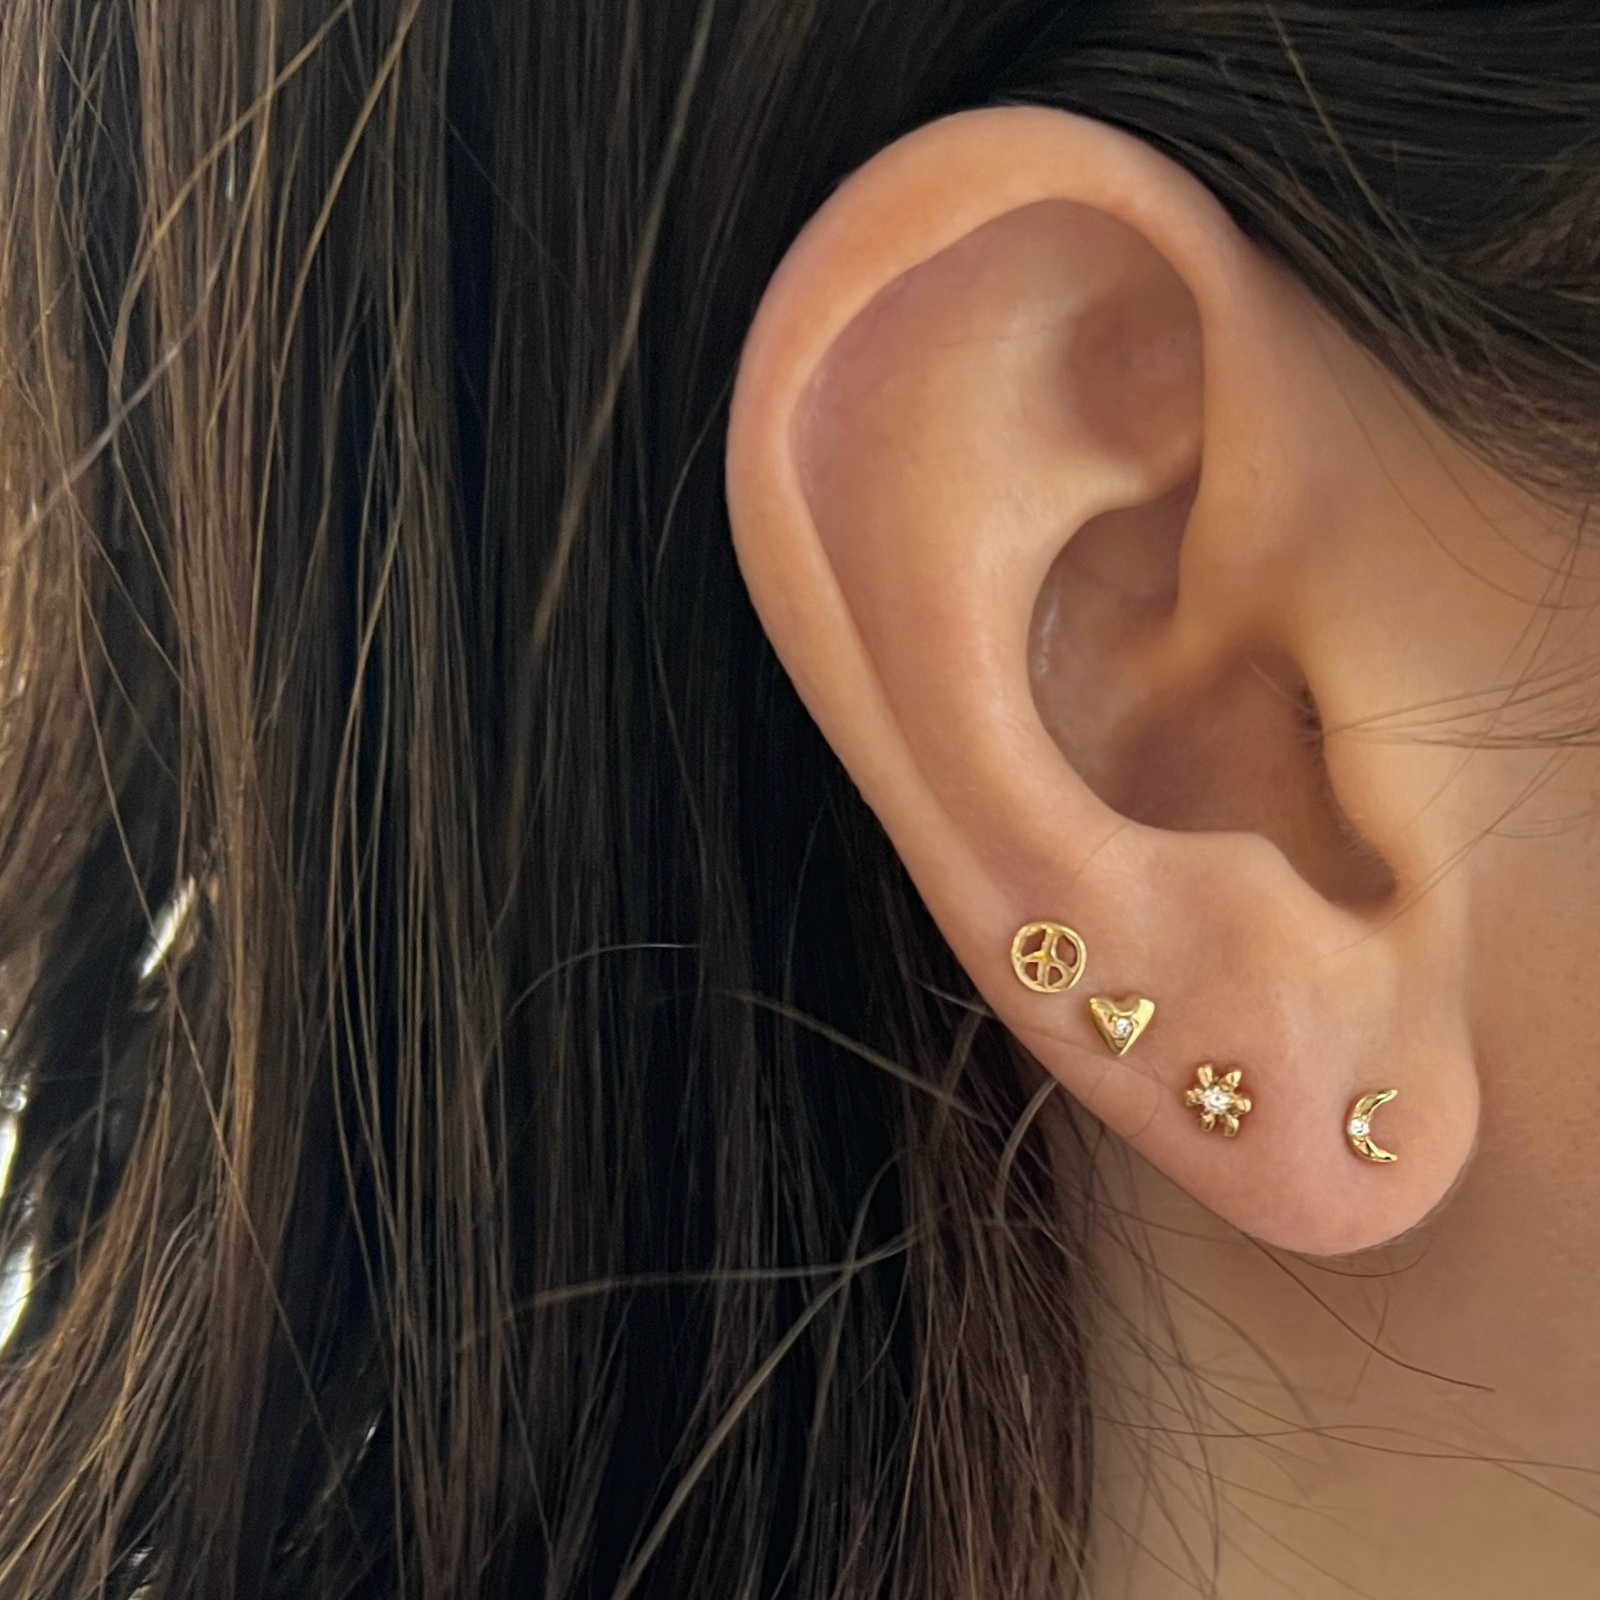 personalized tiny moon stud earrings 14k gold diamonds or gemstones